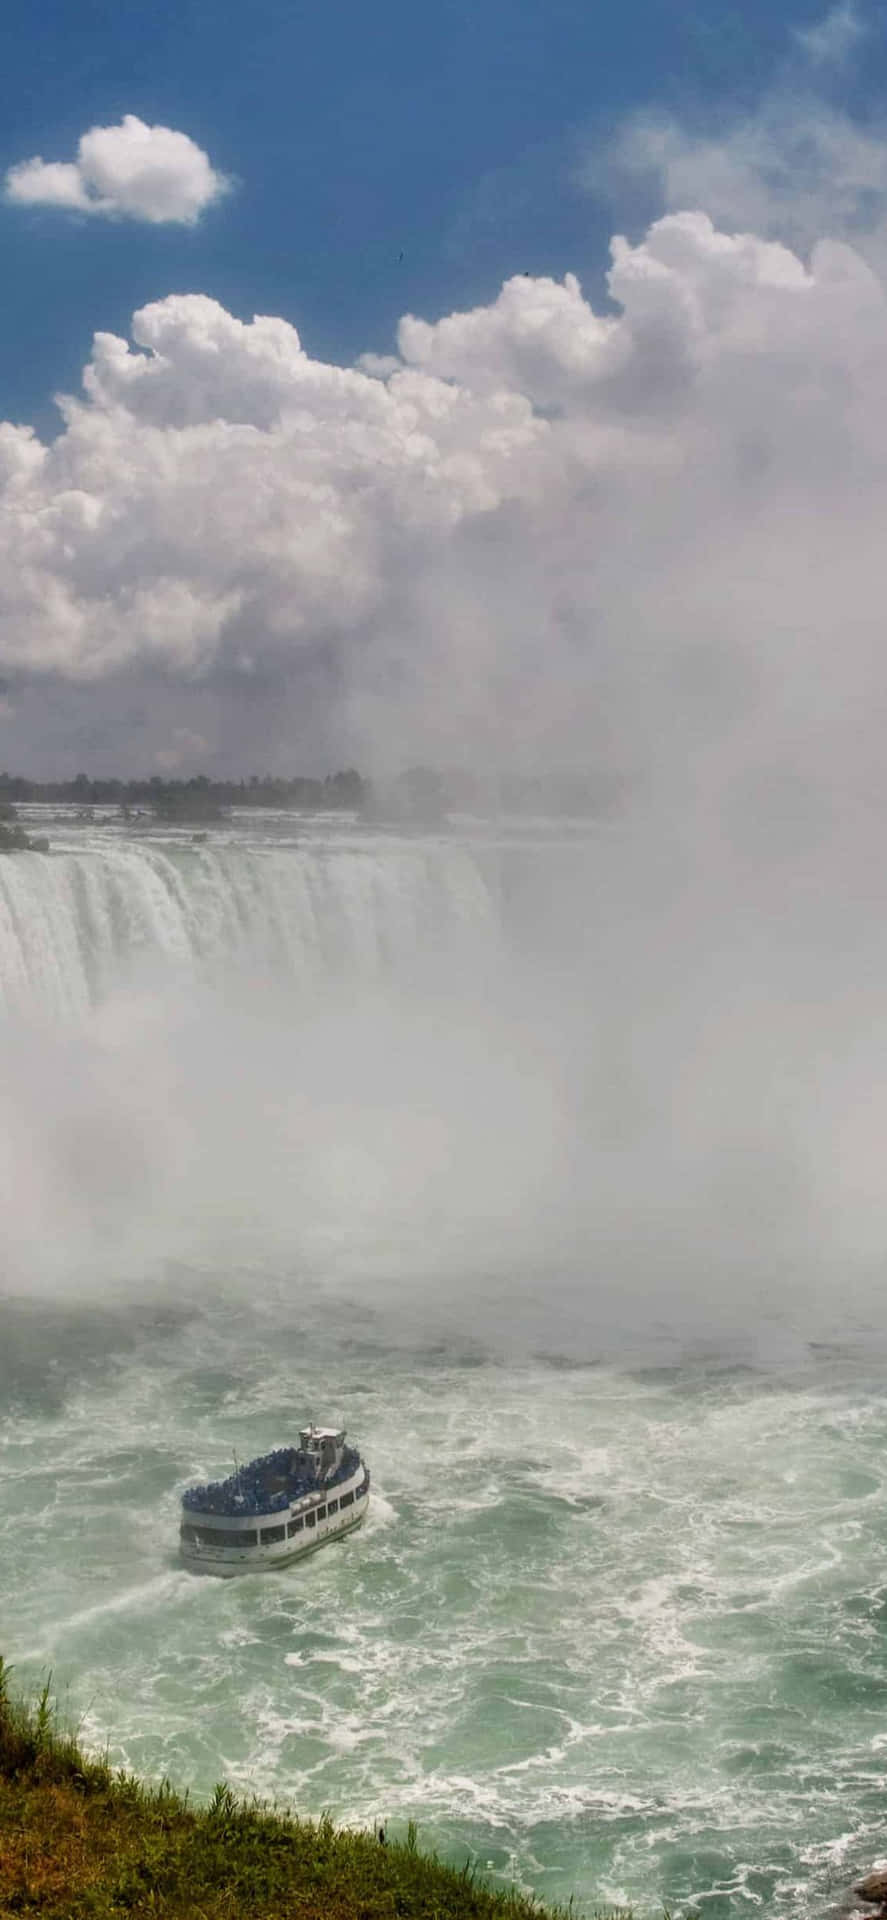 Iphonex Bakgrundsbild Med Ontario Niagarafallen.